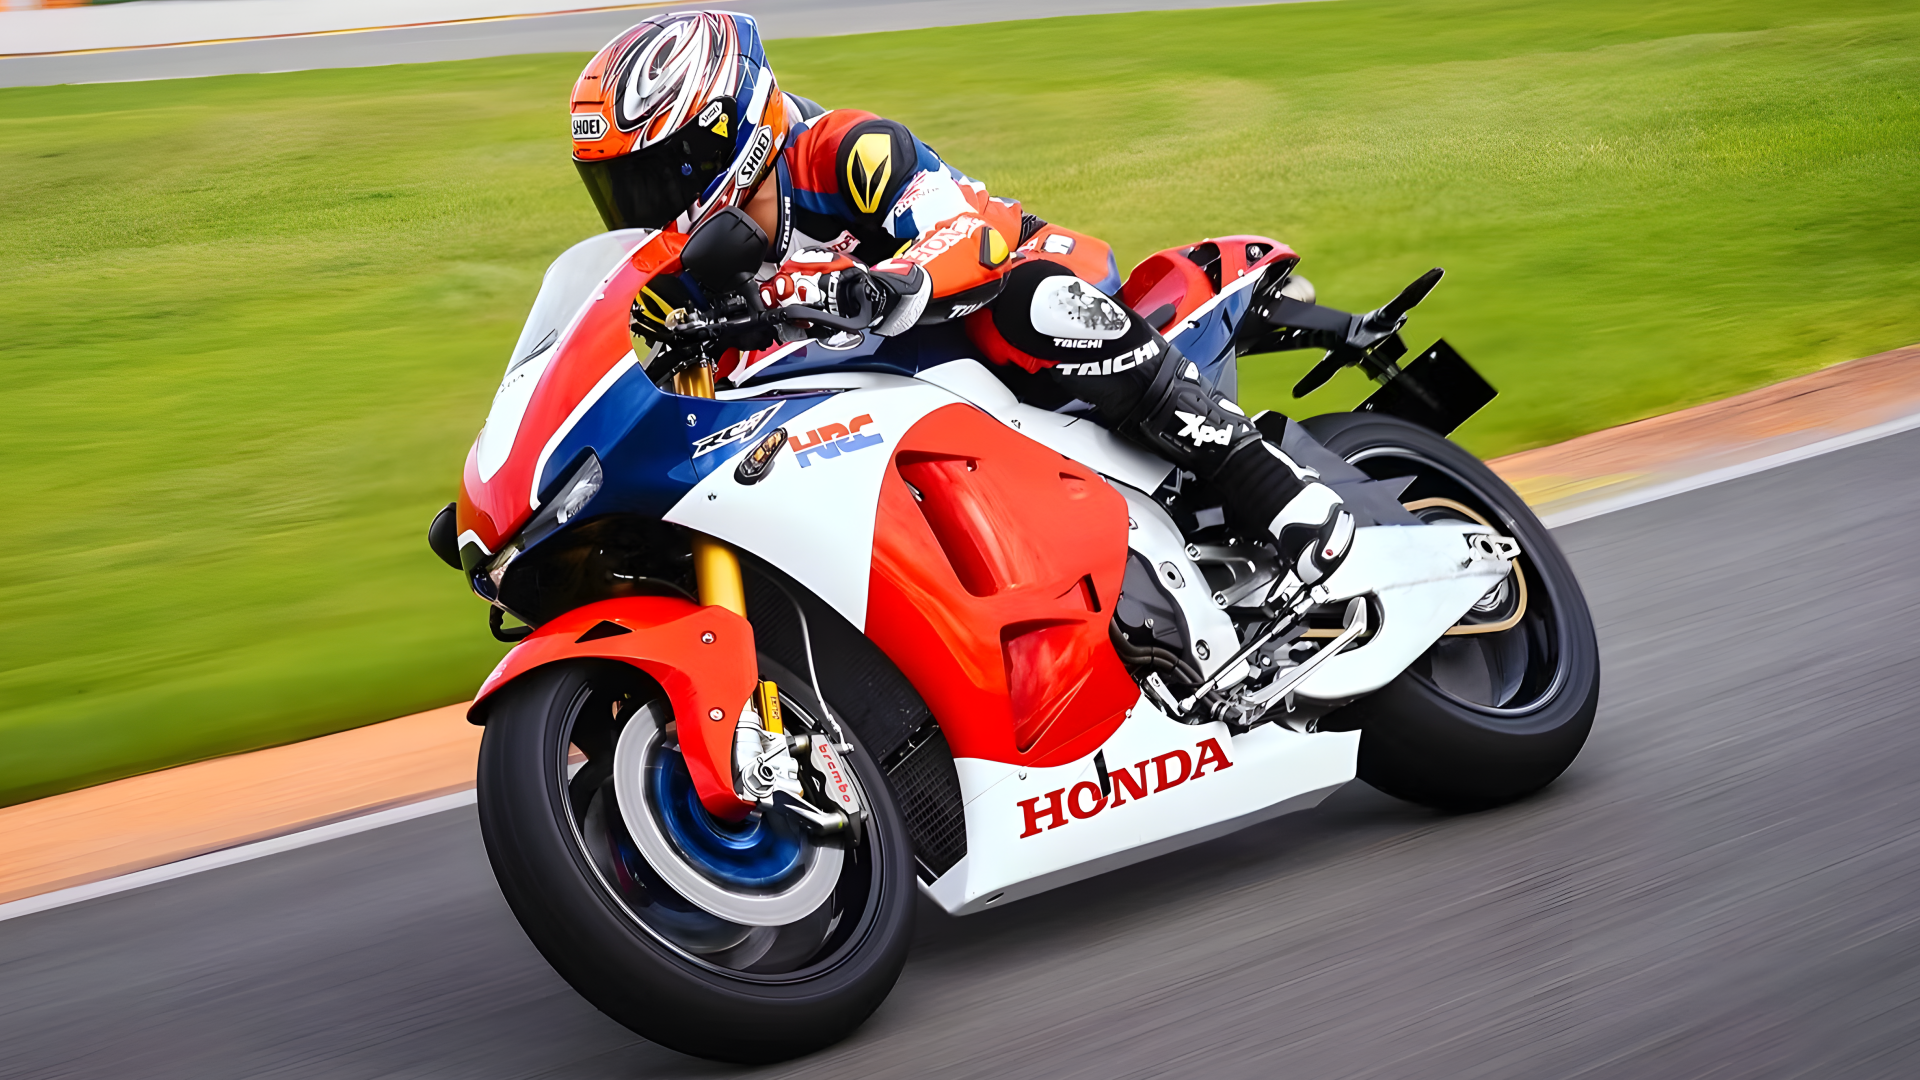 Honda RC213V-S cornering on racetrack